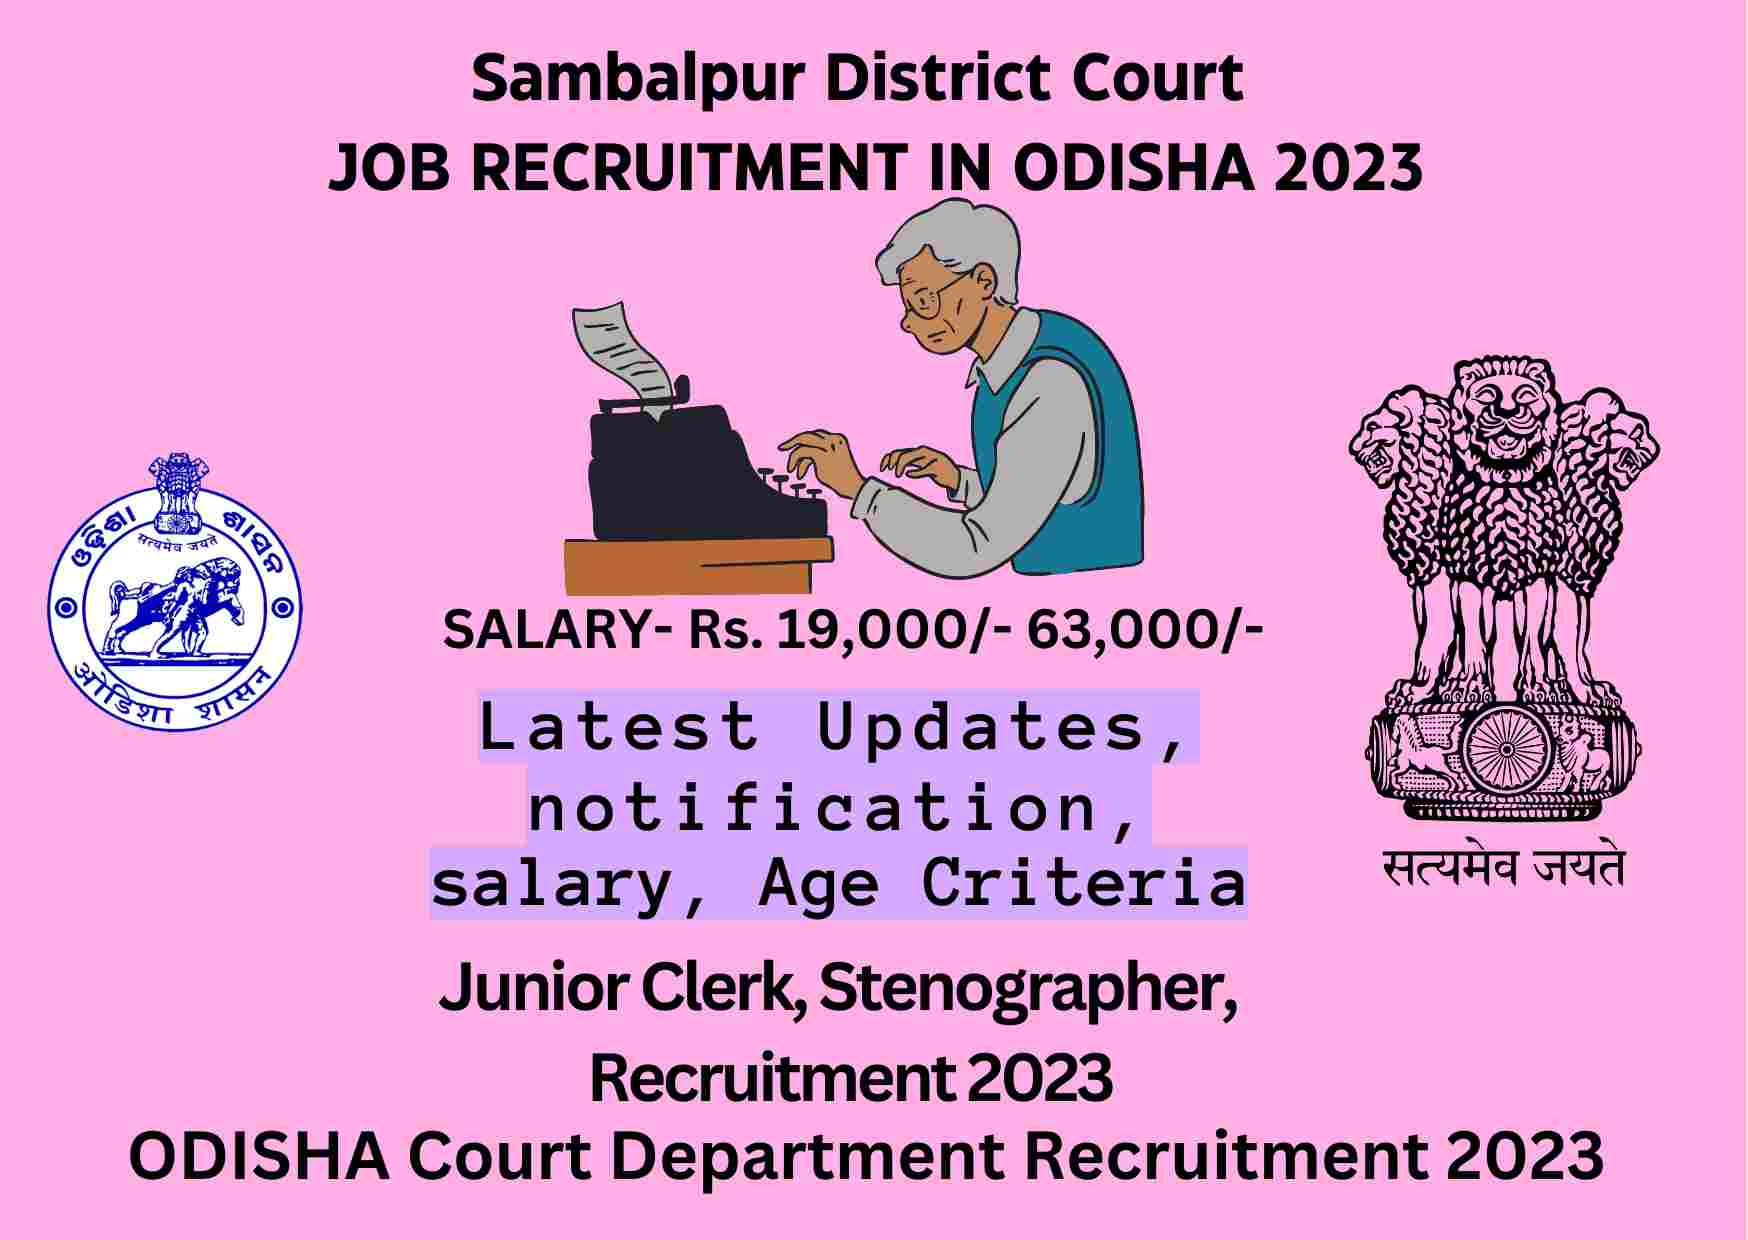 Sambalpur District Court Recruitment 2023